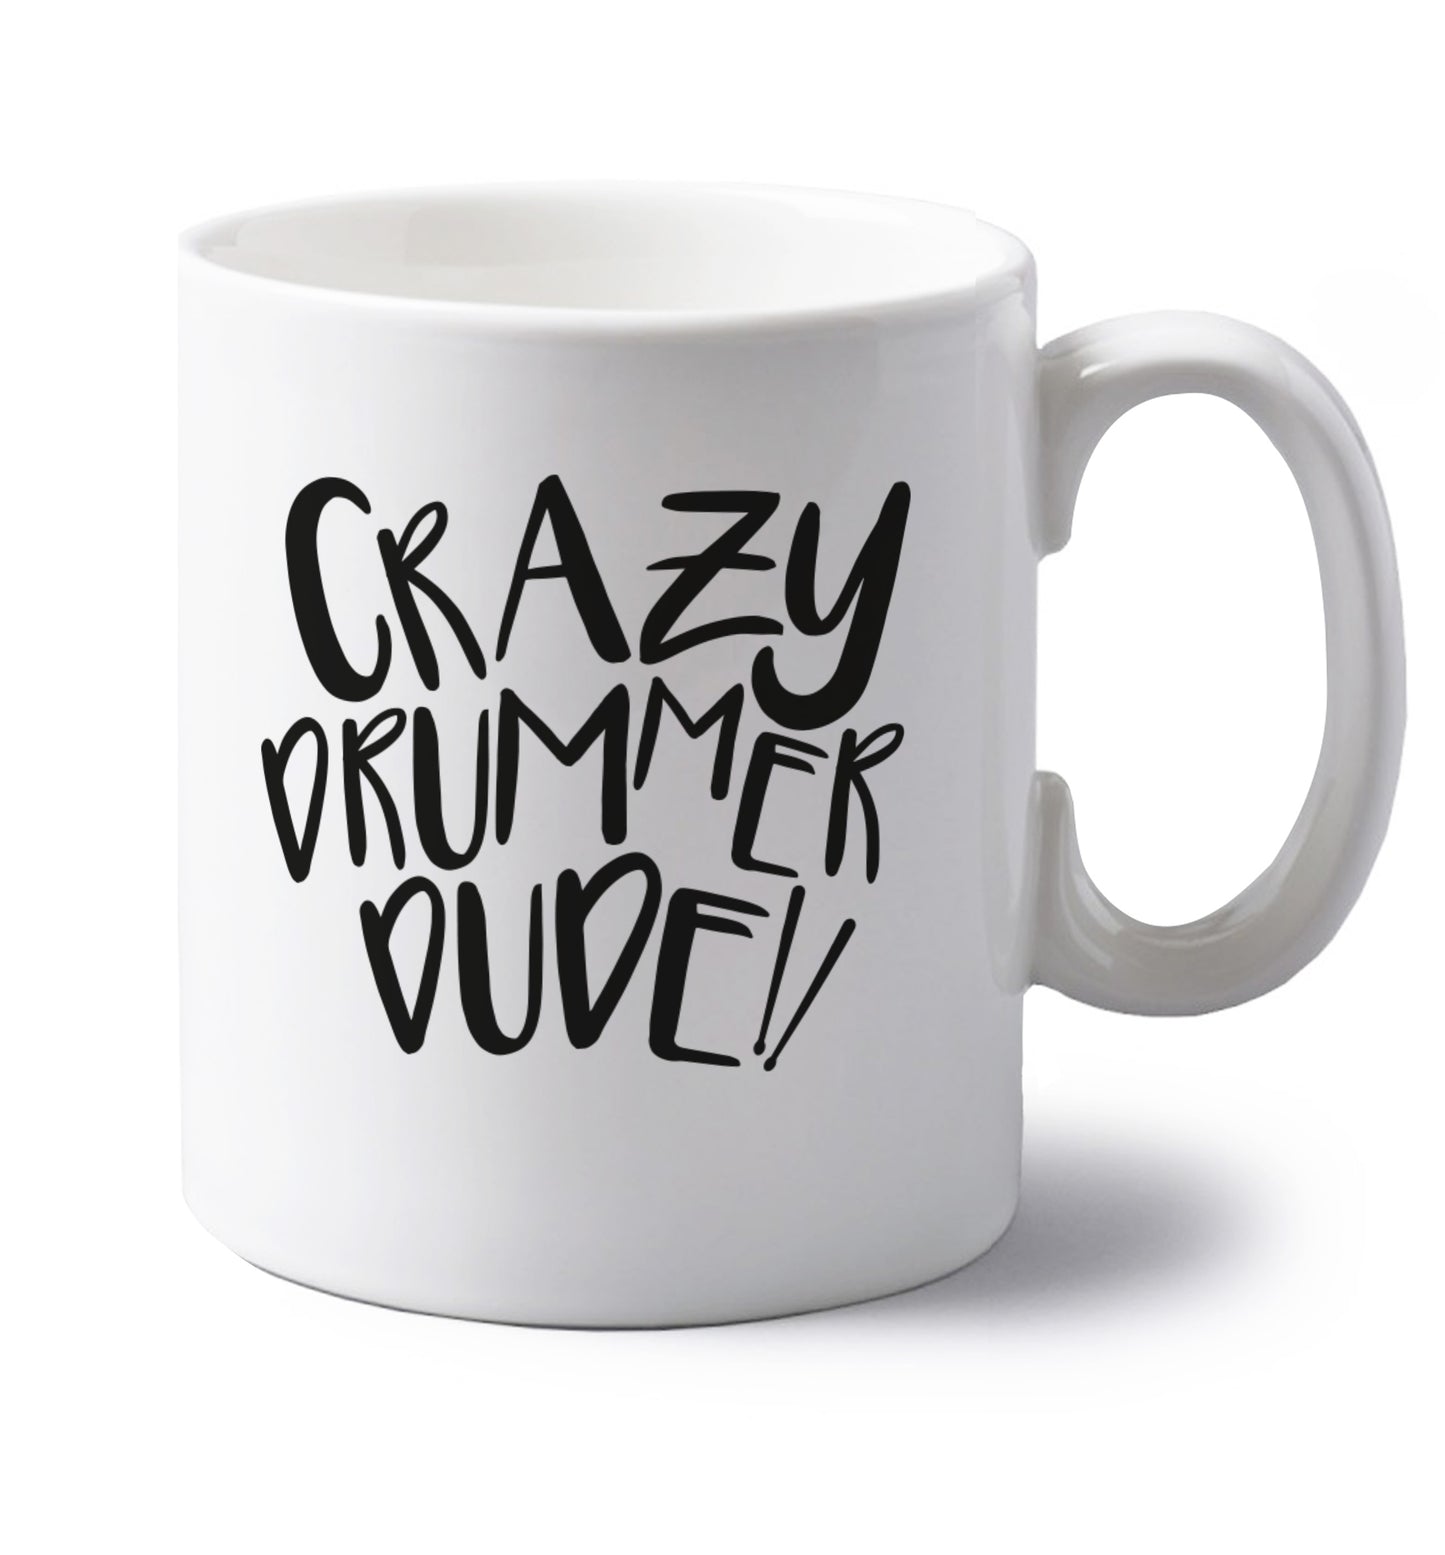 Crazy drummer dude left handed white ceramic mug 